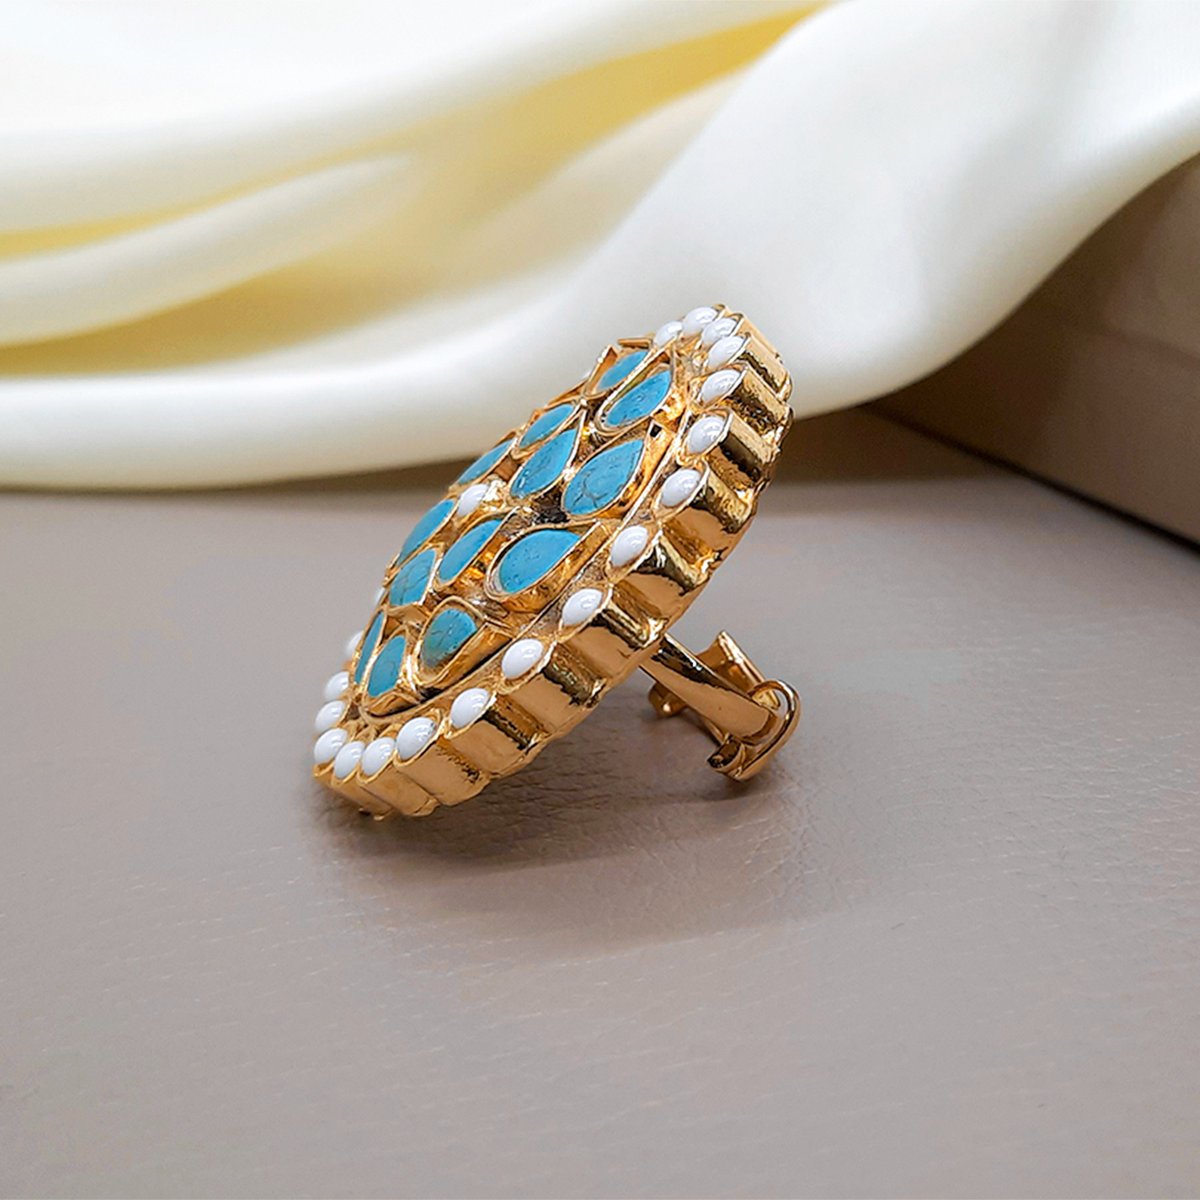 Pearl Farshi Ring For Women Rings Size Adjustable
Shop Now👉bit.ly/3Bm0jNU
.
#etsyukshop #etsyukseller #londonlife #viral #amazingvideo #usa_tiktok #foryou #places #eroupe #online #onlinebusiness #onlinejewelery #onlineshopping #onlineshop #jewelry #jewellery #earrings